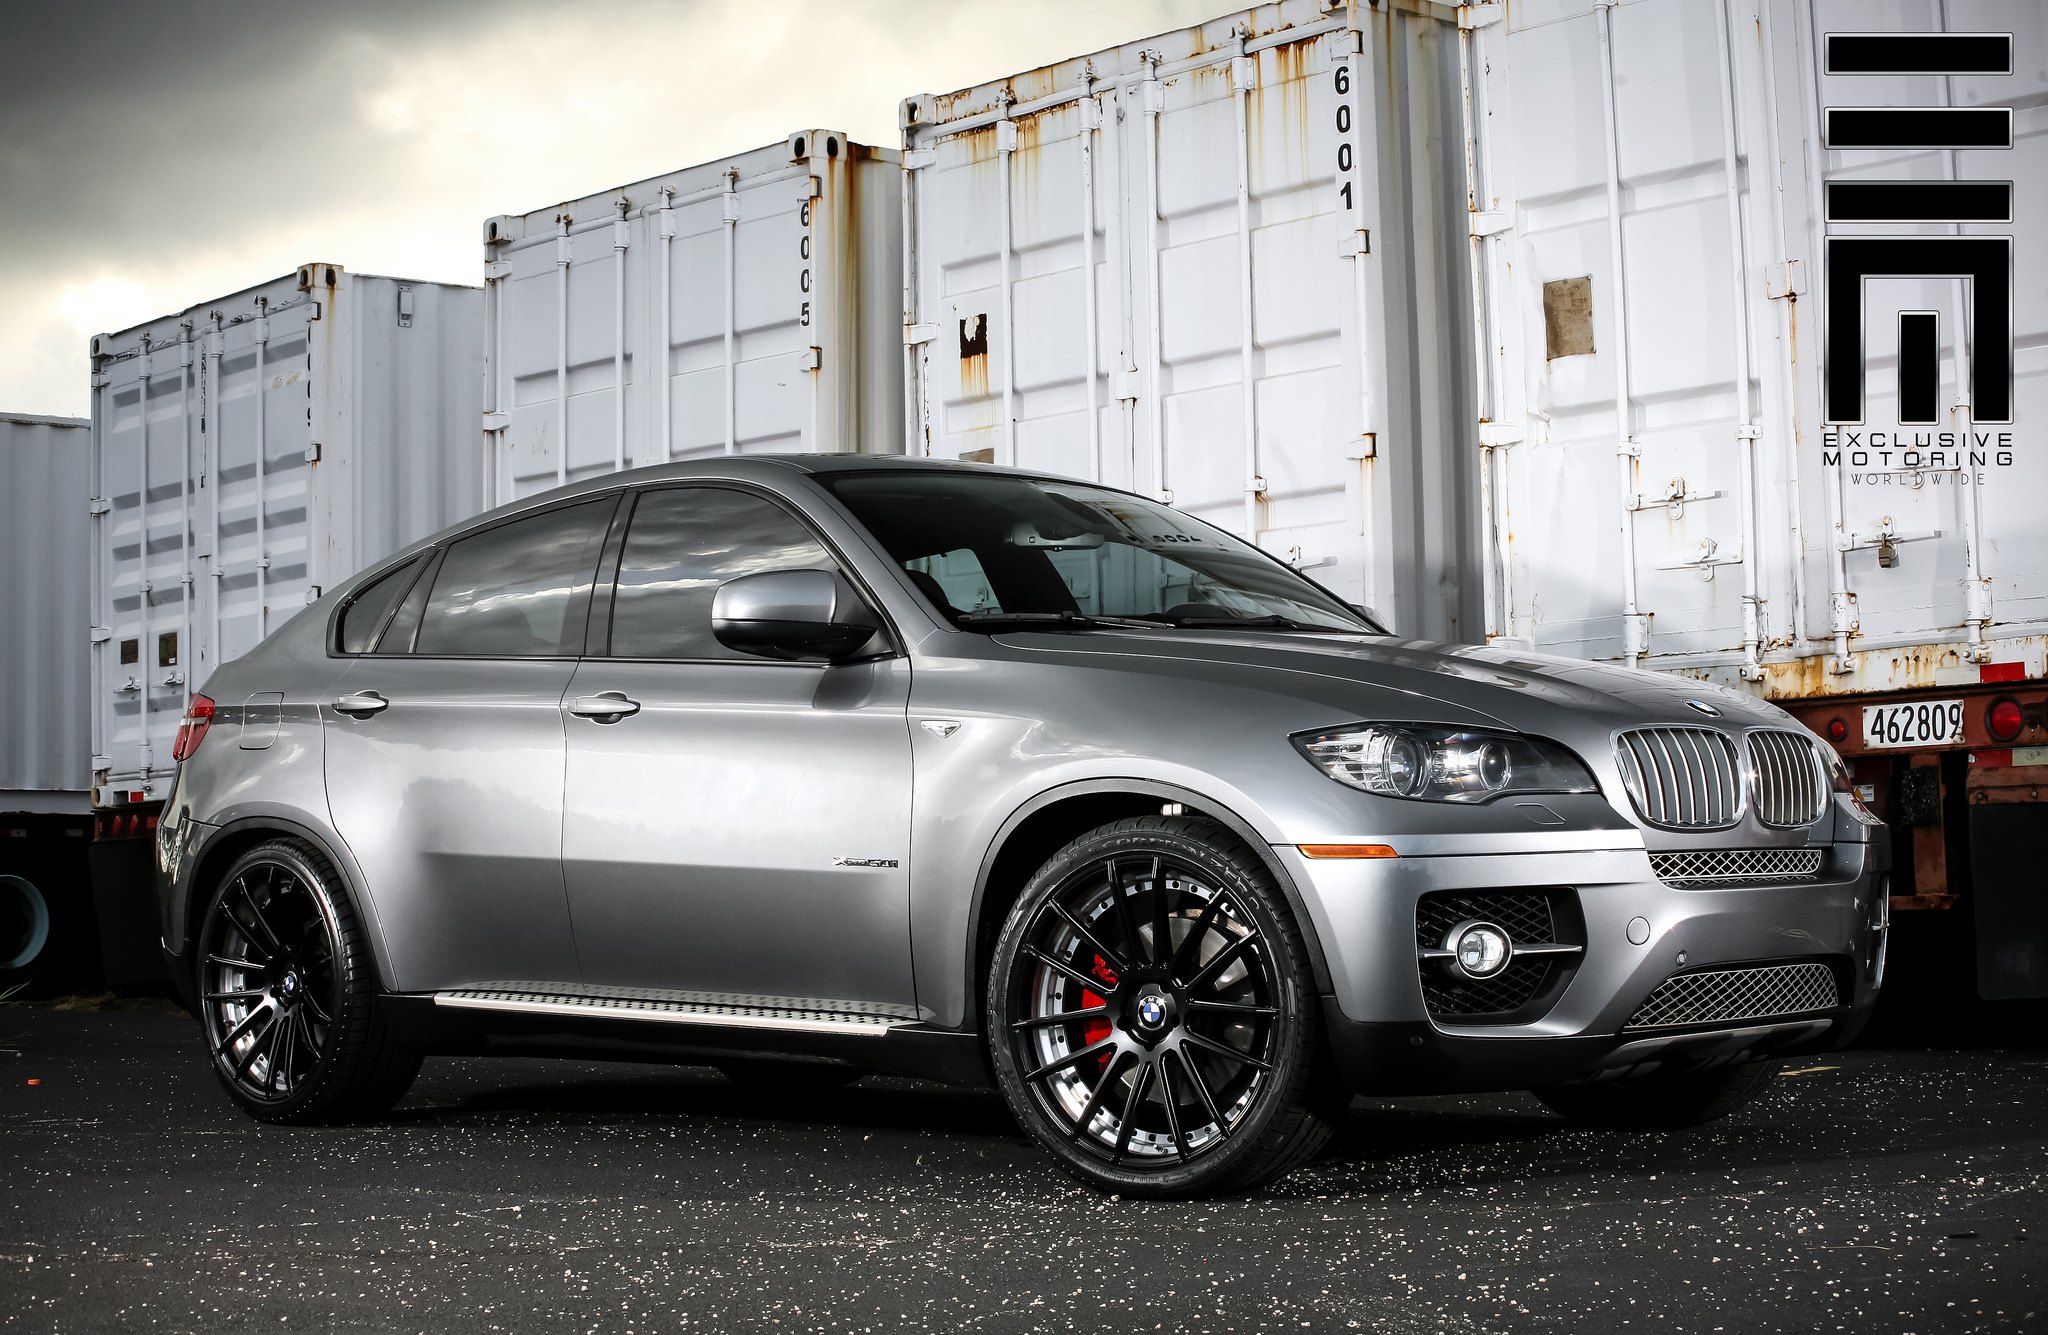 Metallic Gray BMW X6 on Black Wheels - Photo by Exclusive Motoring